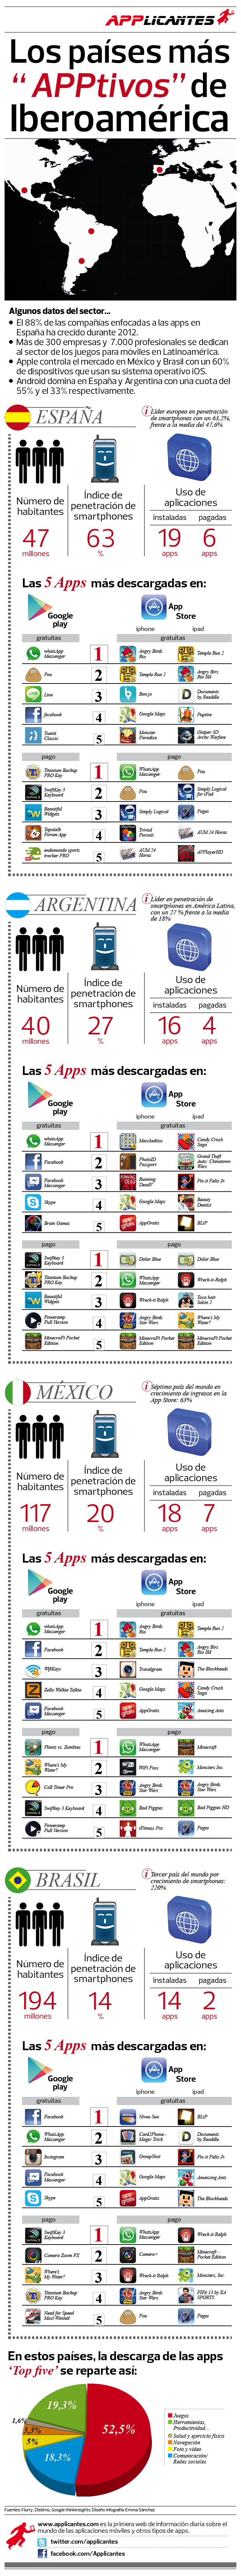 infografia applicantes.com los países más apptivos de Iberoamérica